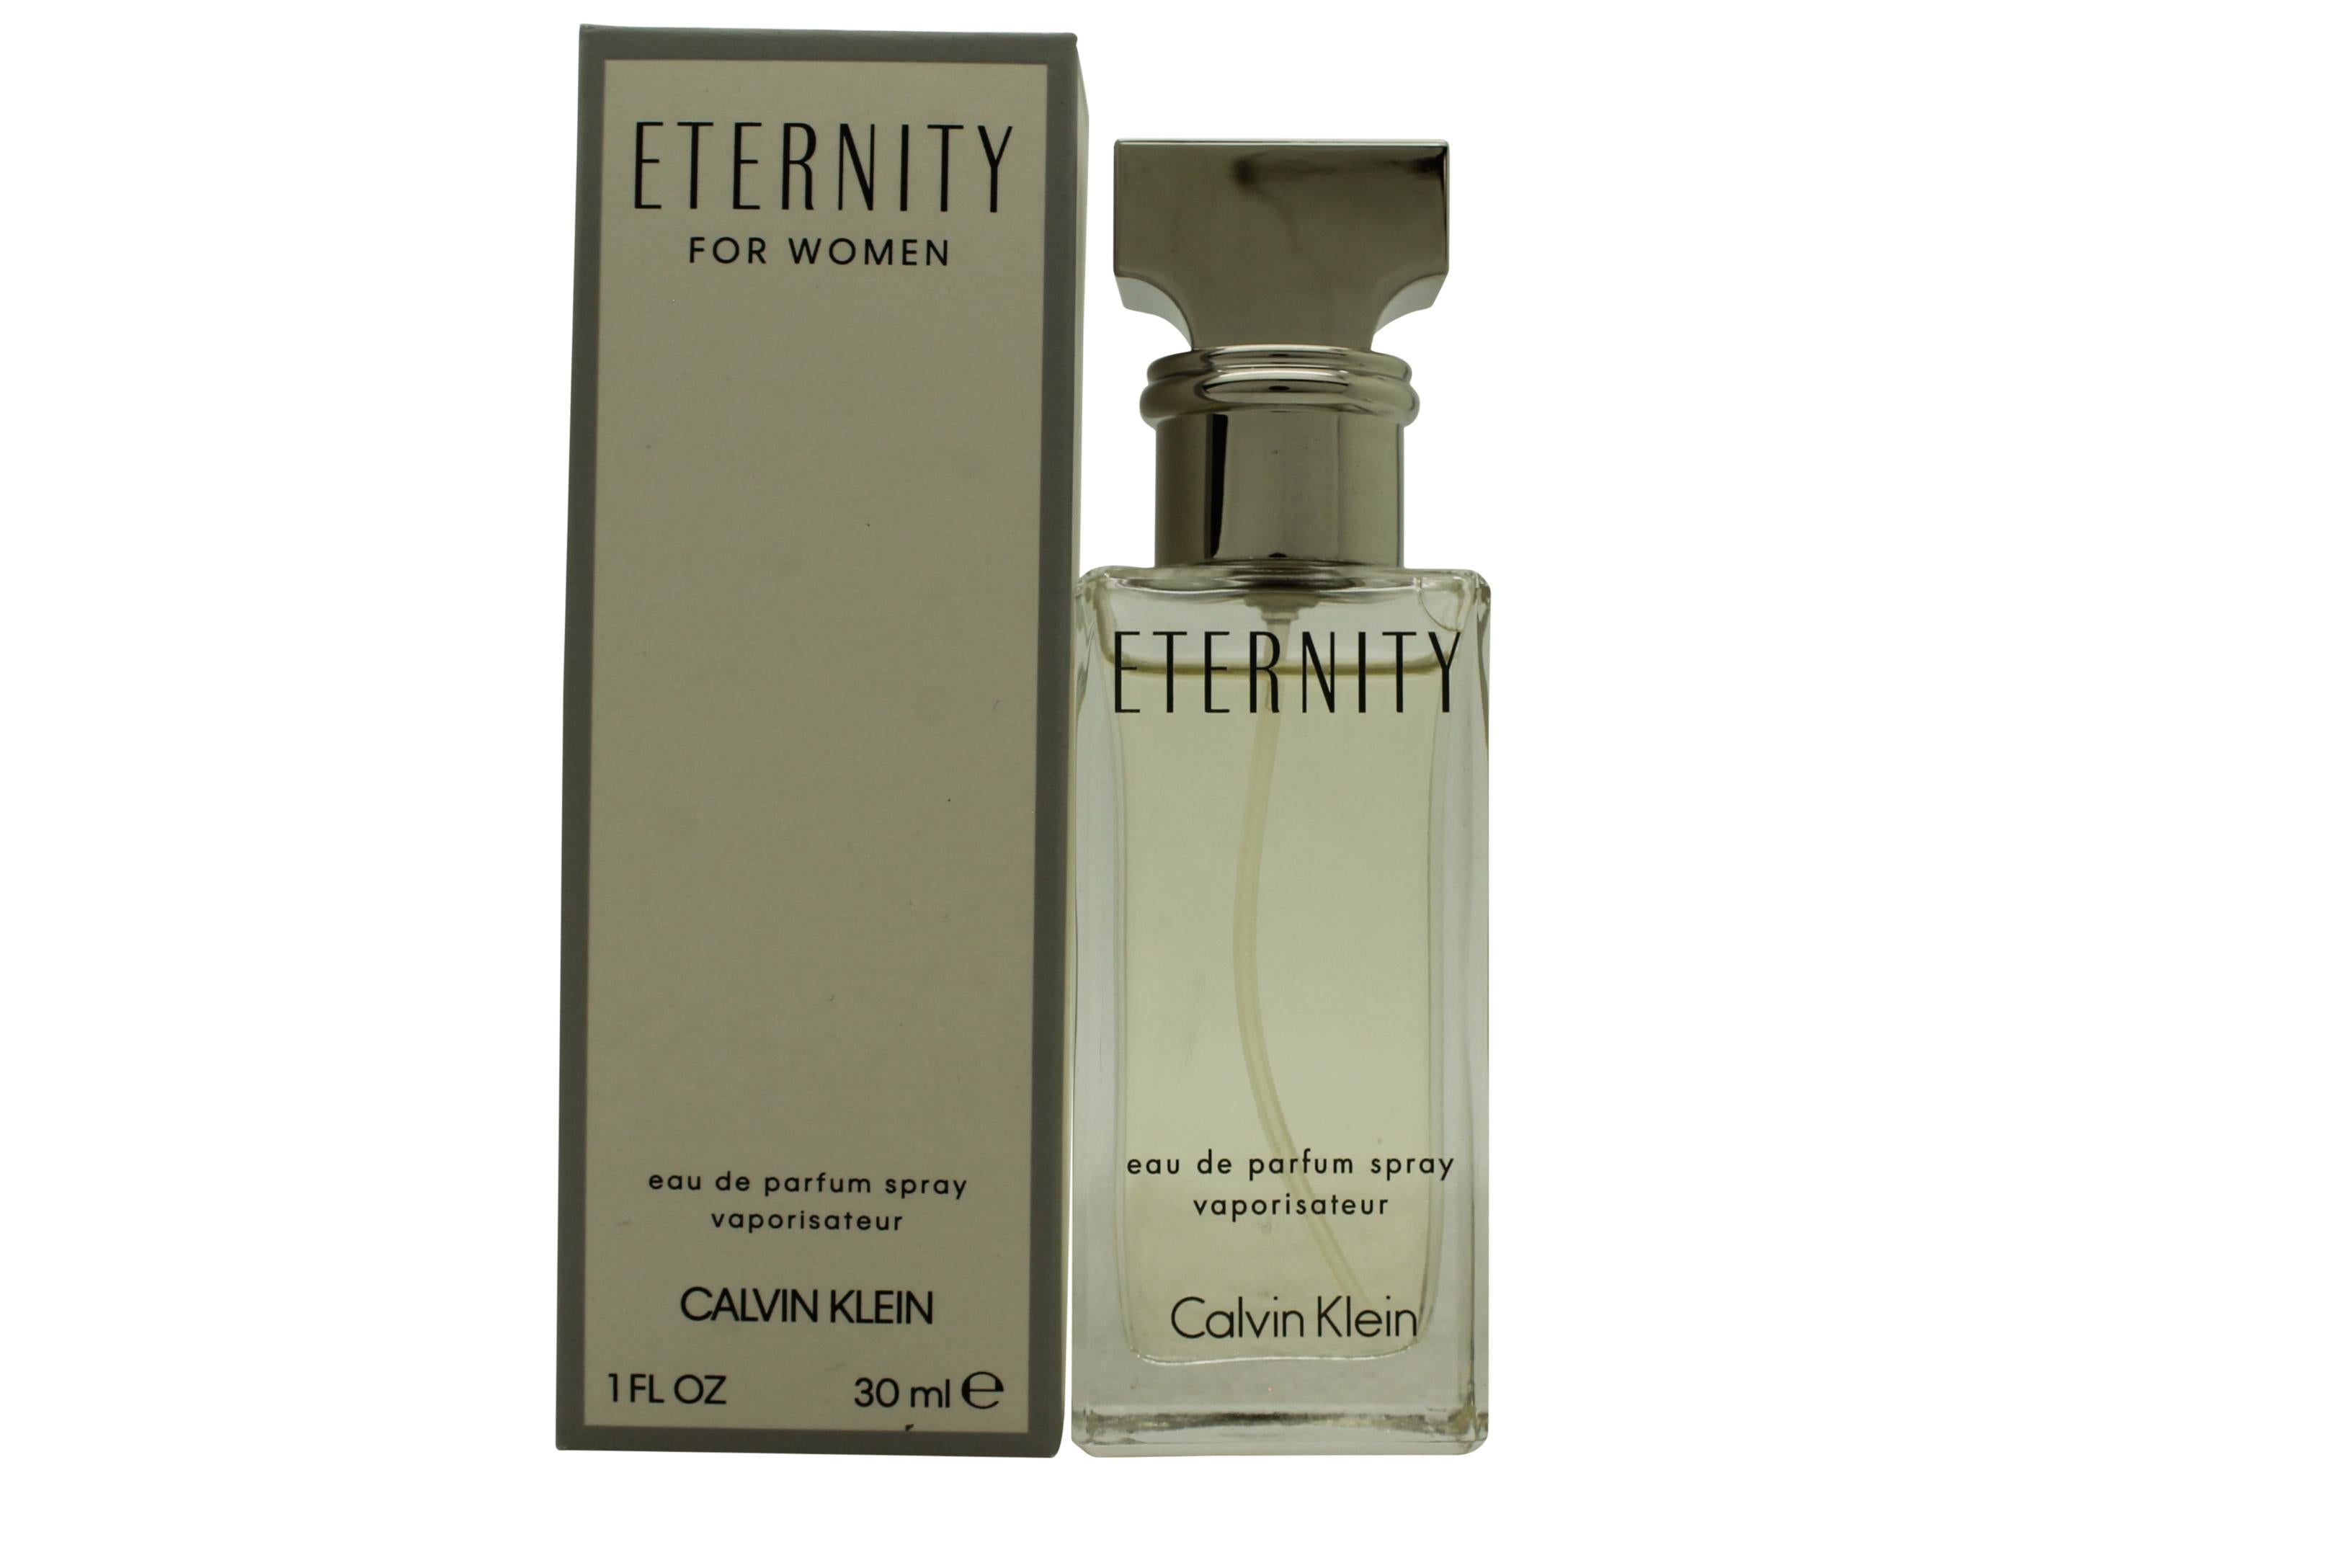 View Calvin Klein Eternity Eau de Parfum 30ml Spray information